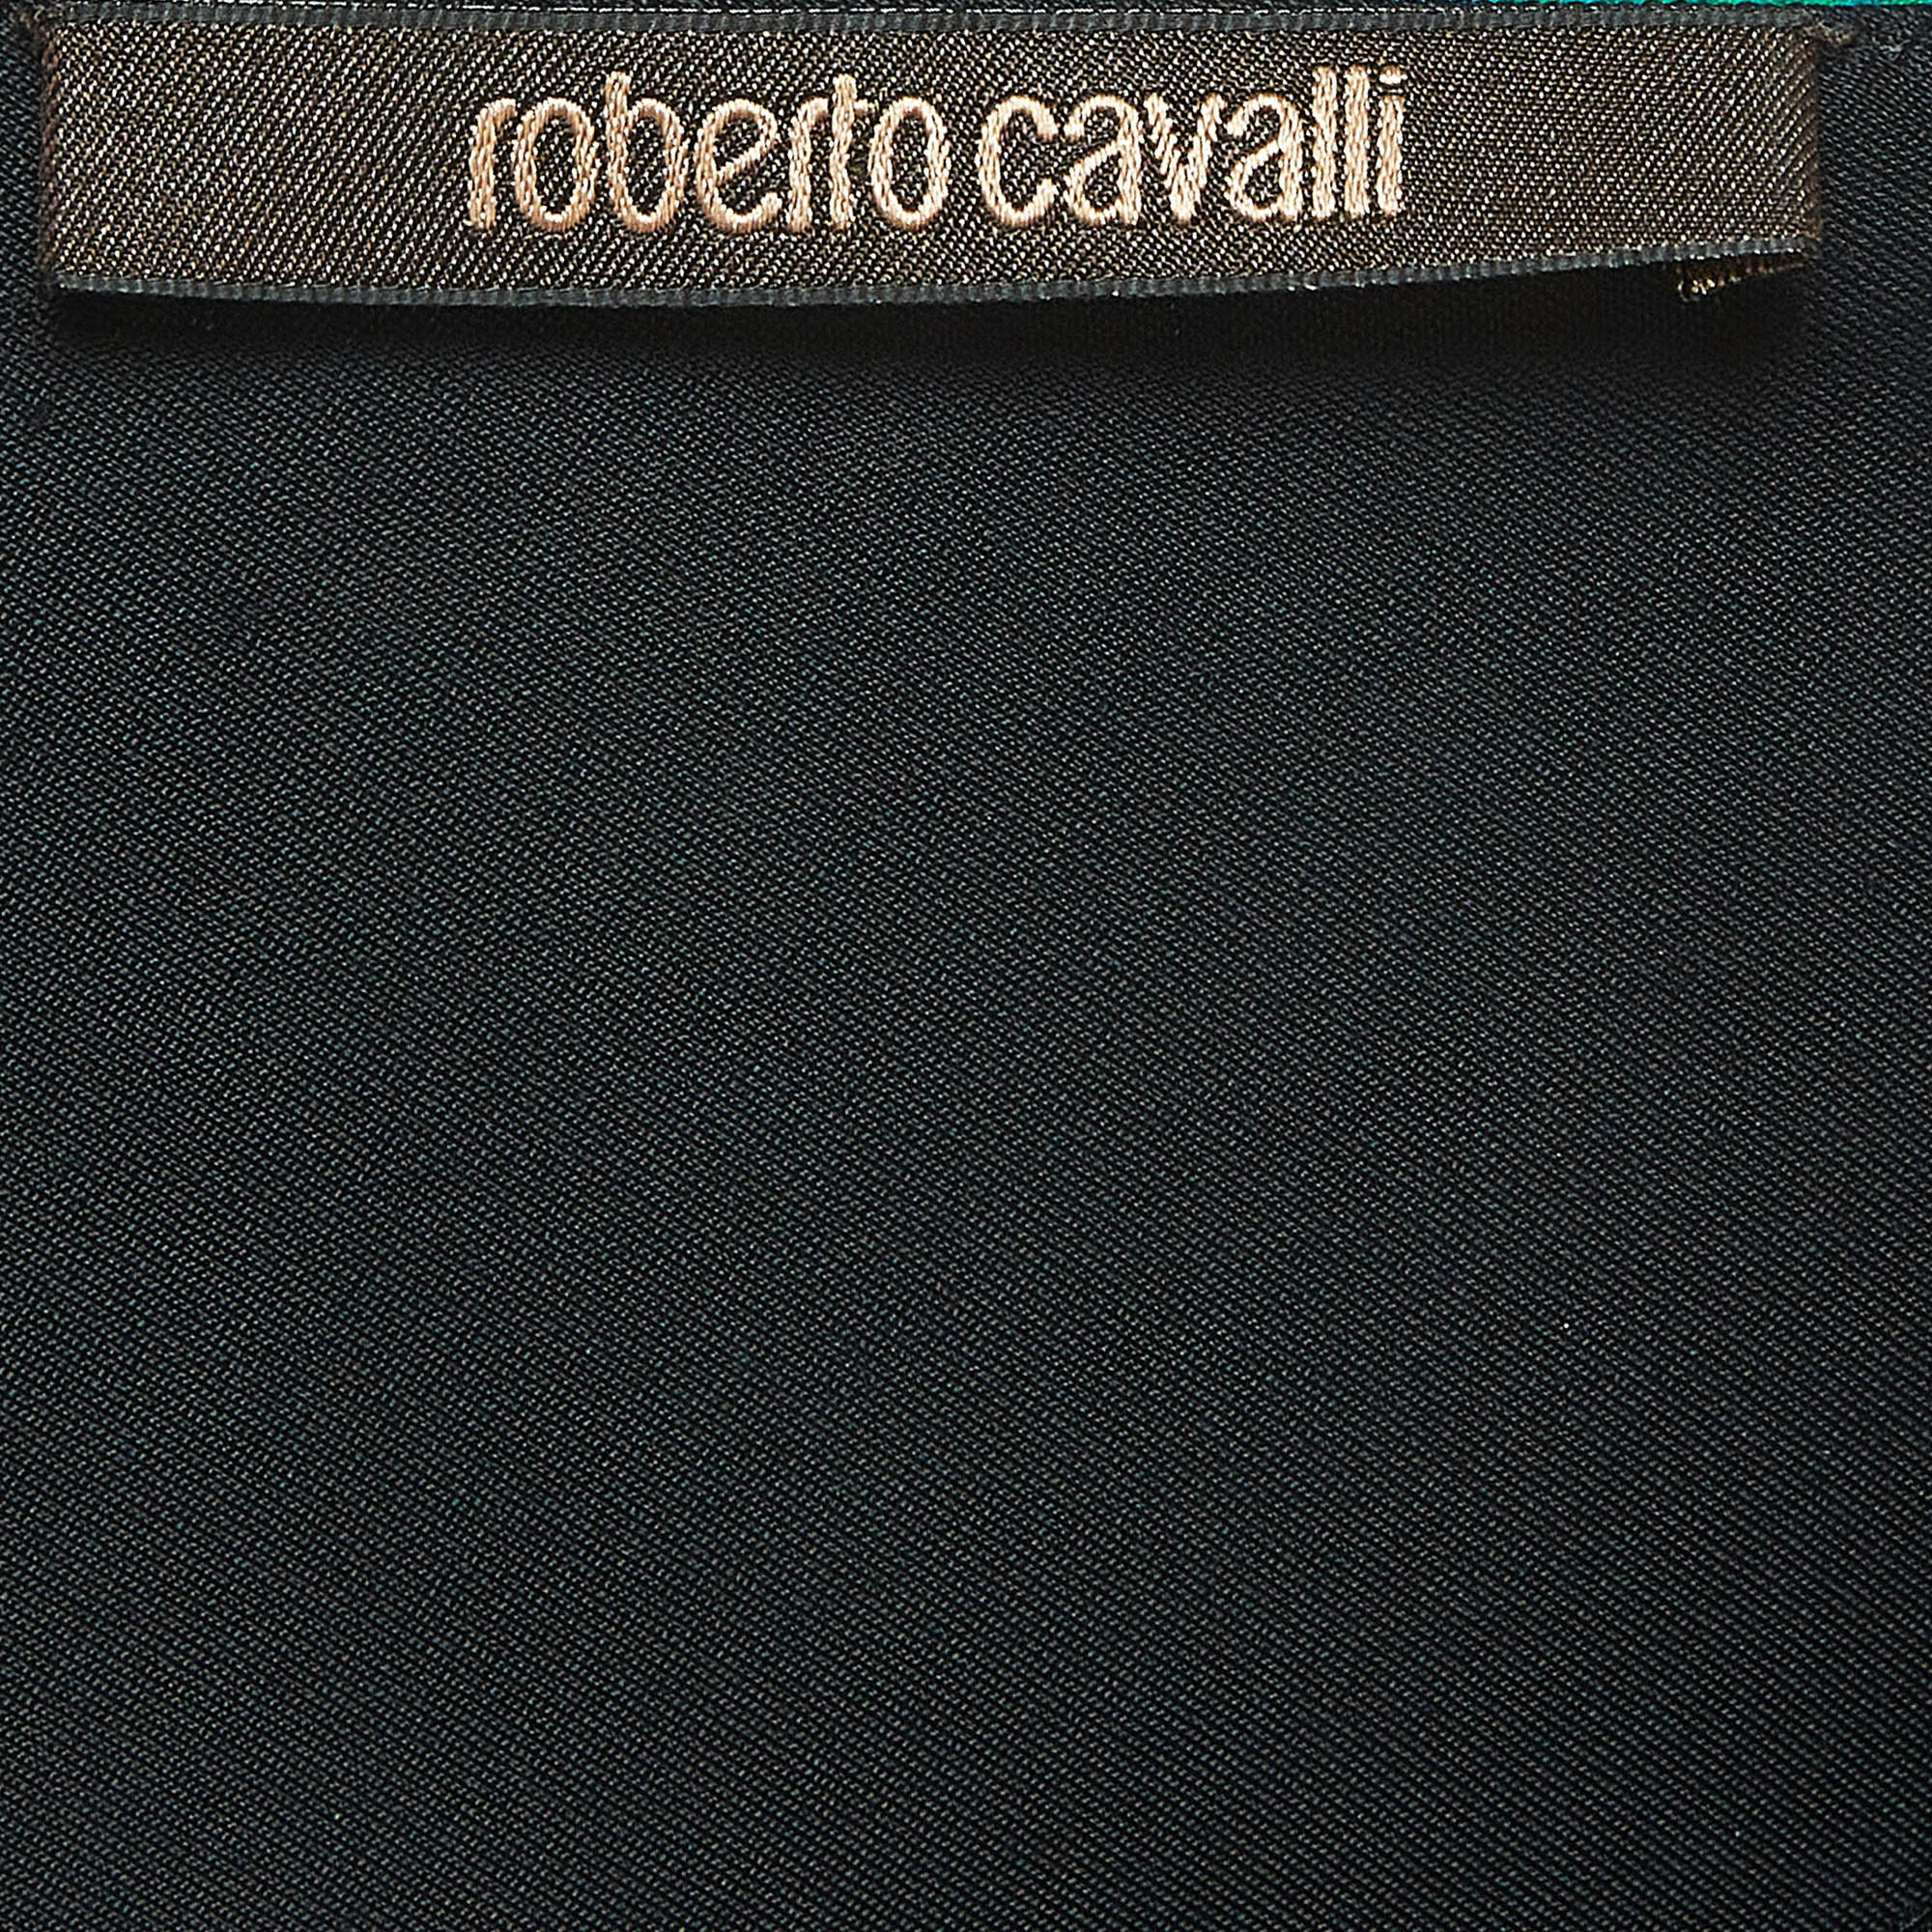 Roberto Cavalli Multicolor Print Stretch Knit V-neck Top L